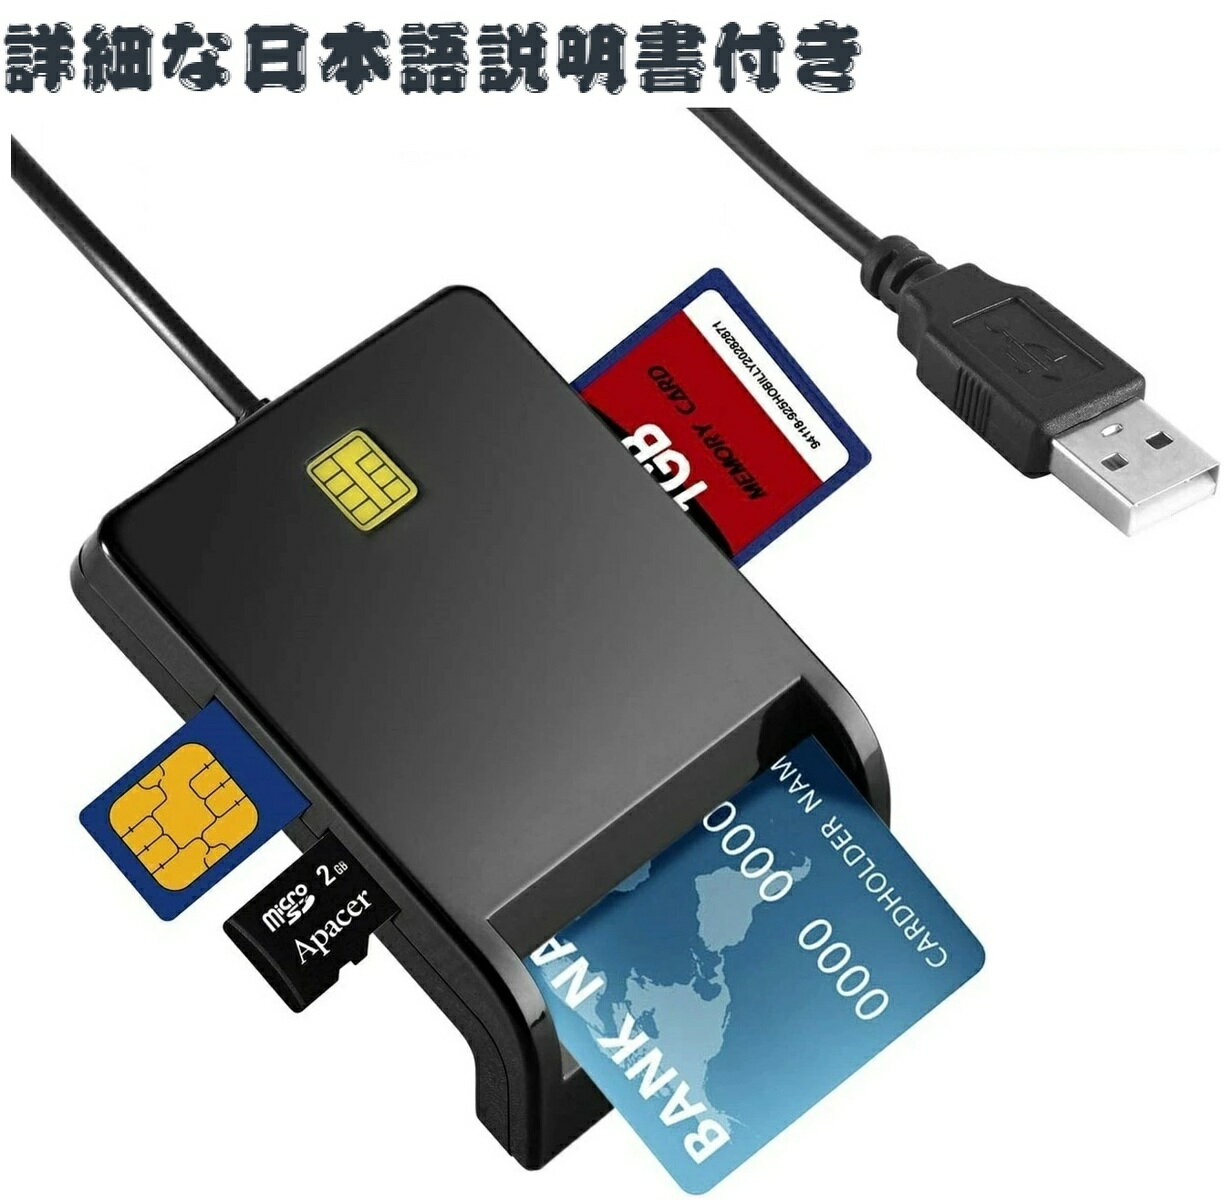 Icカードリーダー マイナンバーカード対応 確定申告 sdカード USB e-Tax 国税 電子申告 マルチカードリーダー 多機能カードリーダー 有線タイプ SD MicroSD TF SIM MMC 設置簡単 プラグ＆プレイ対応 高速通信 日本語説明書